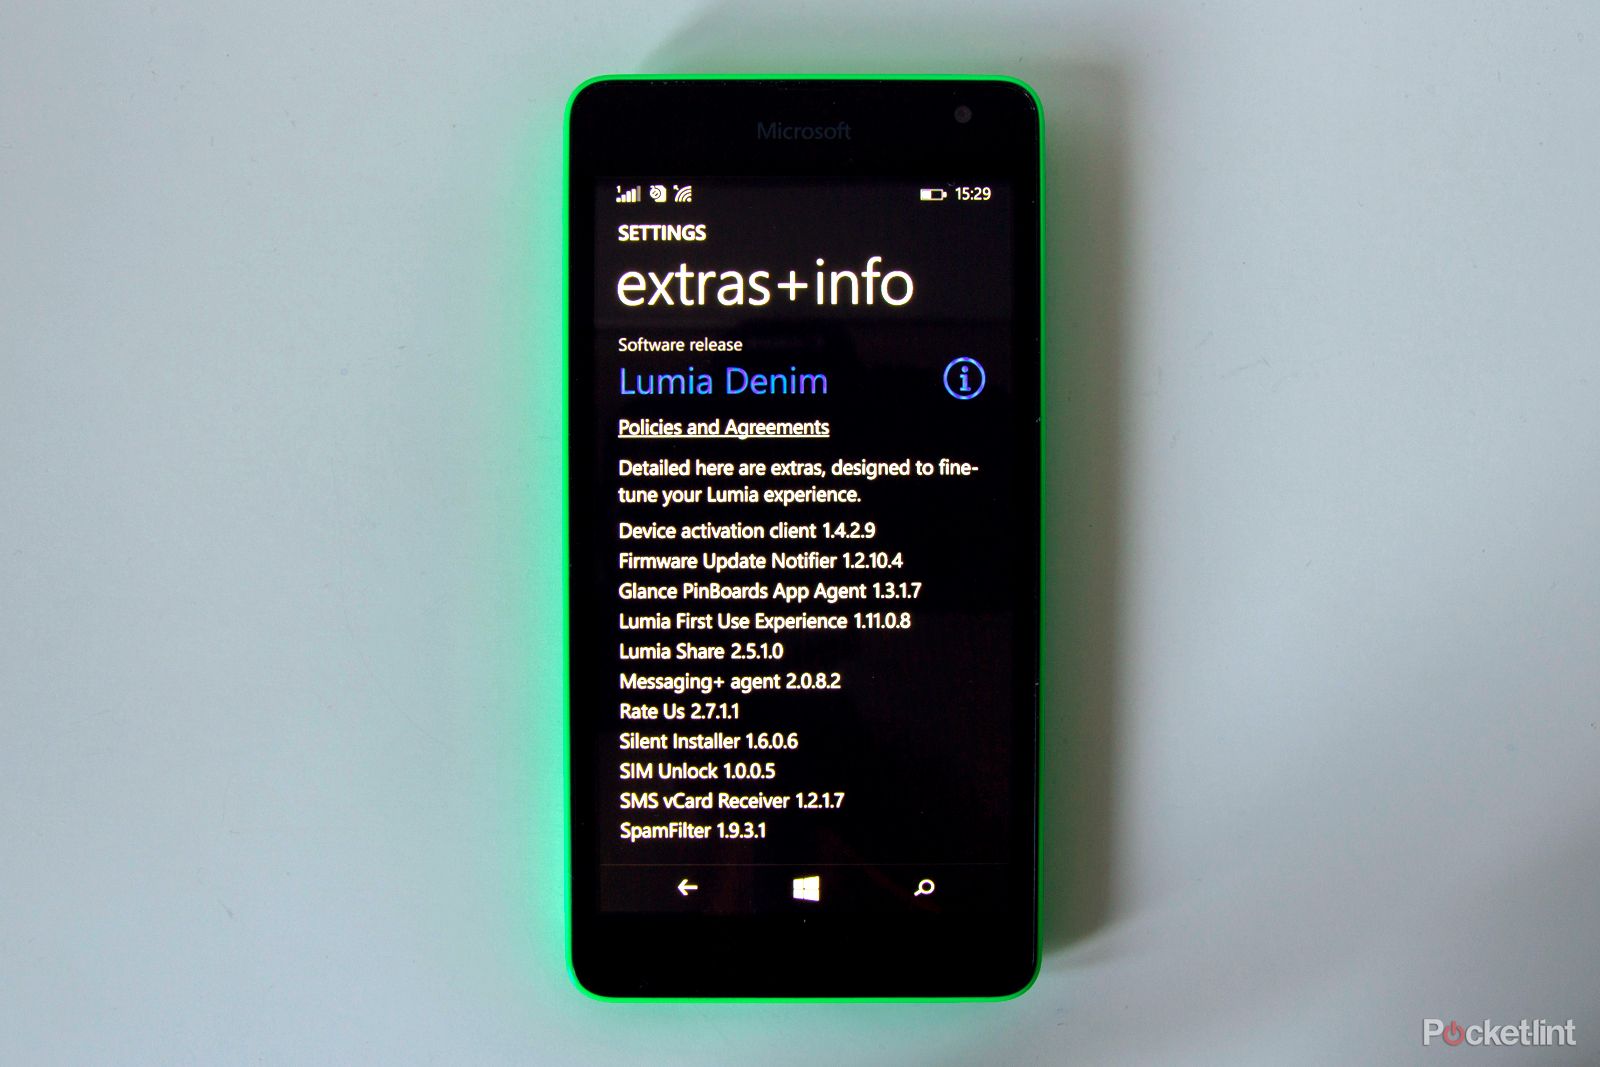 microsoft lumia 535 review image 11